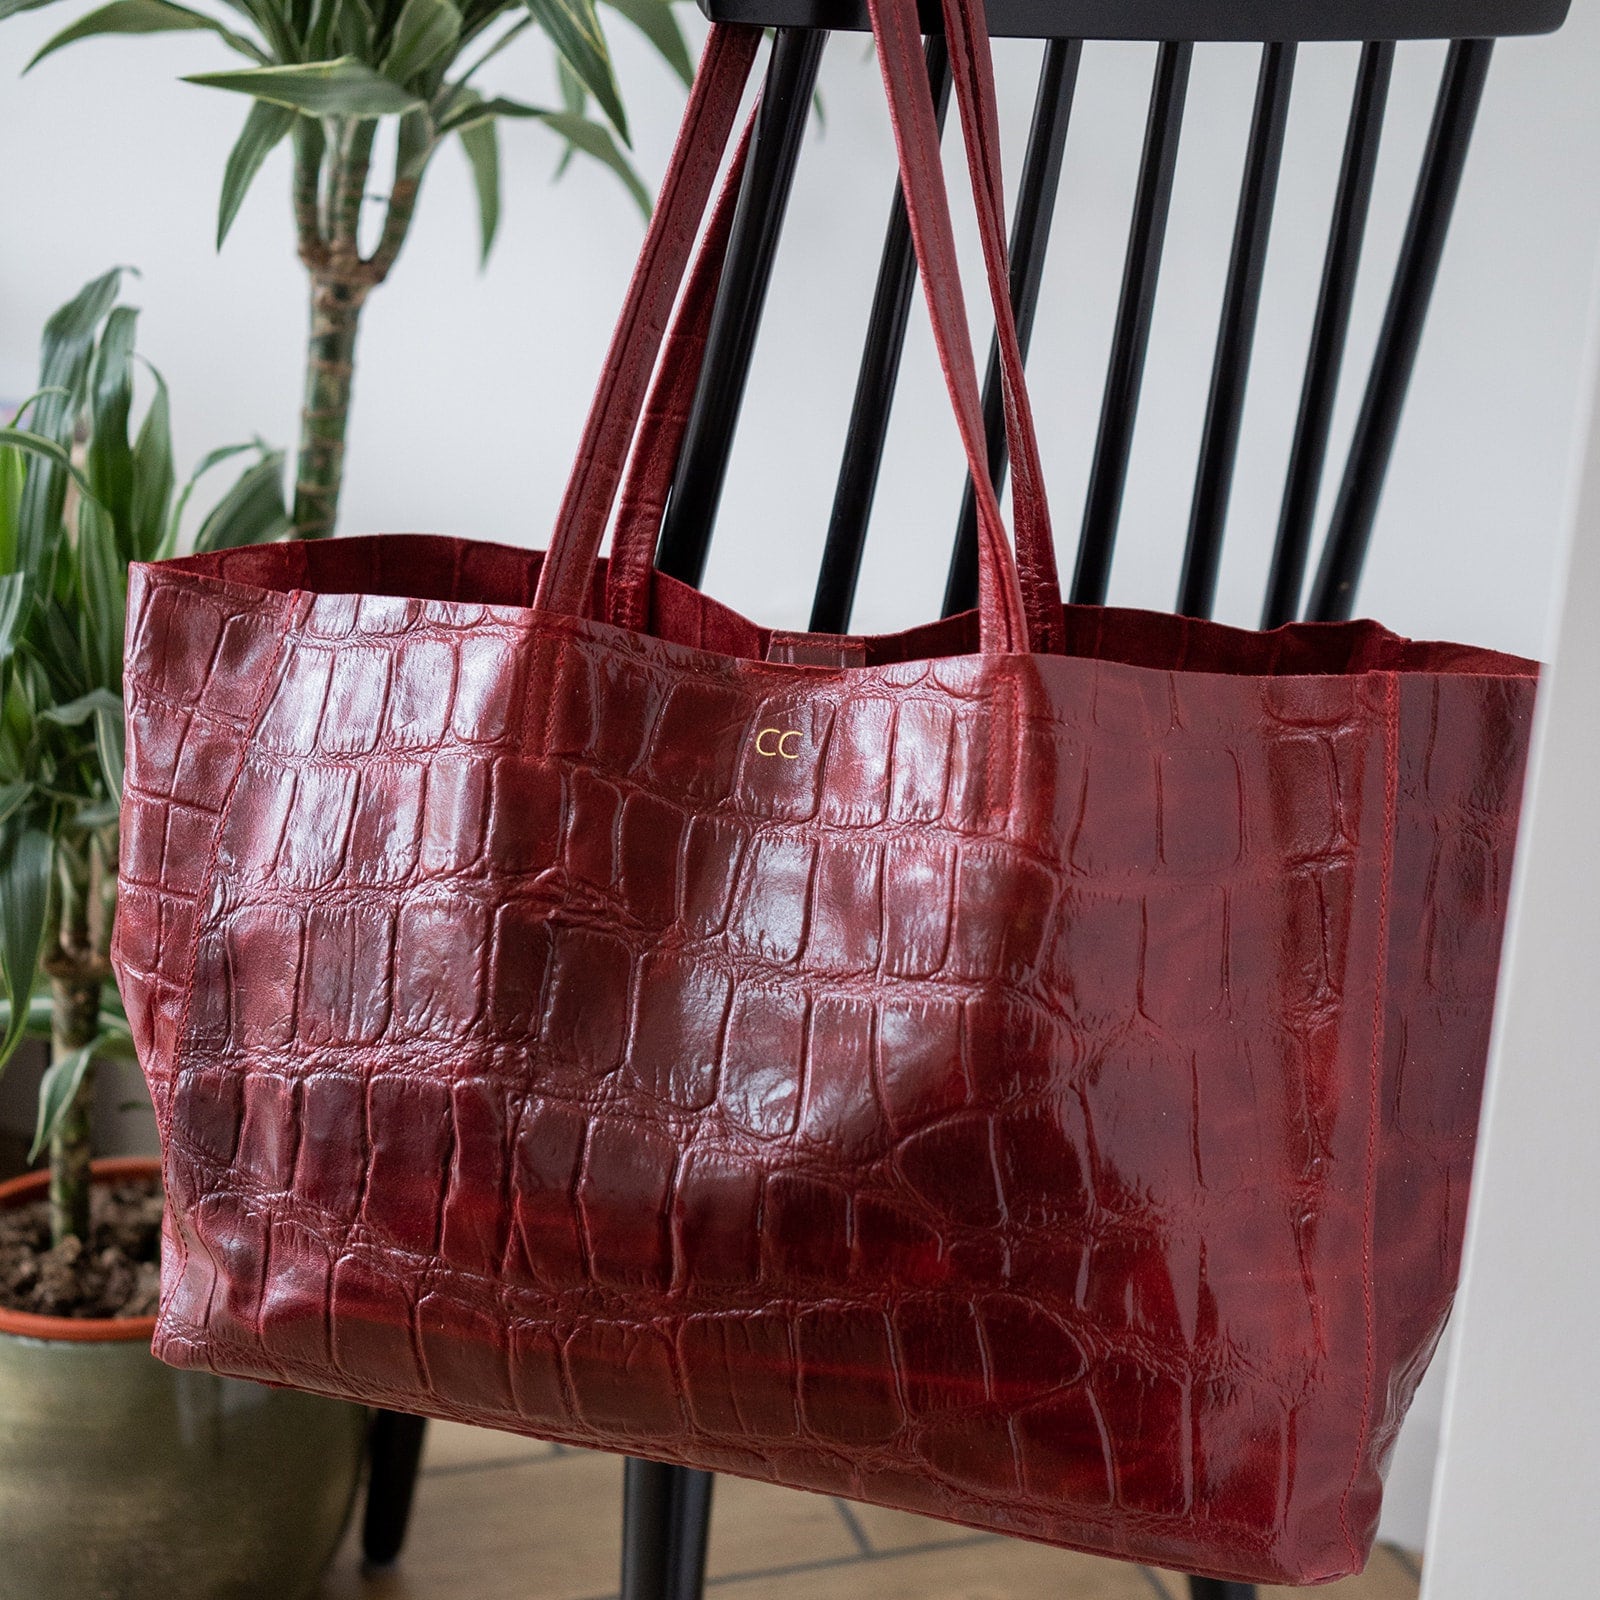 Marian Rivera's multi-million Himalaya croc bag collection